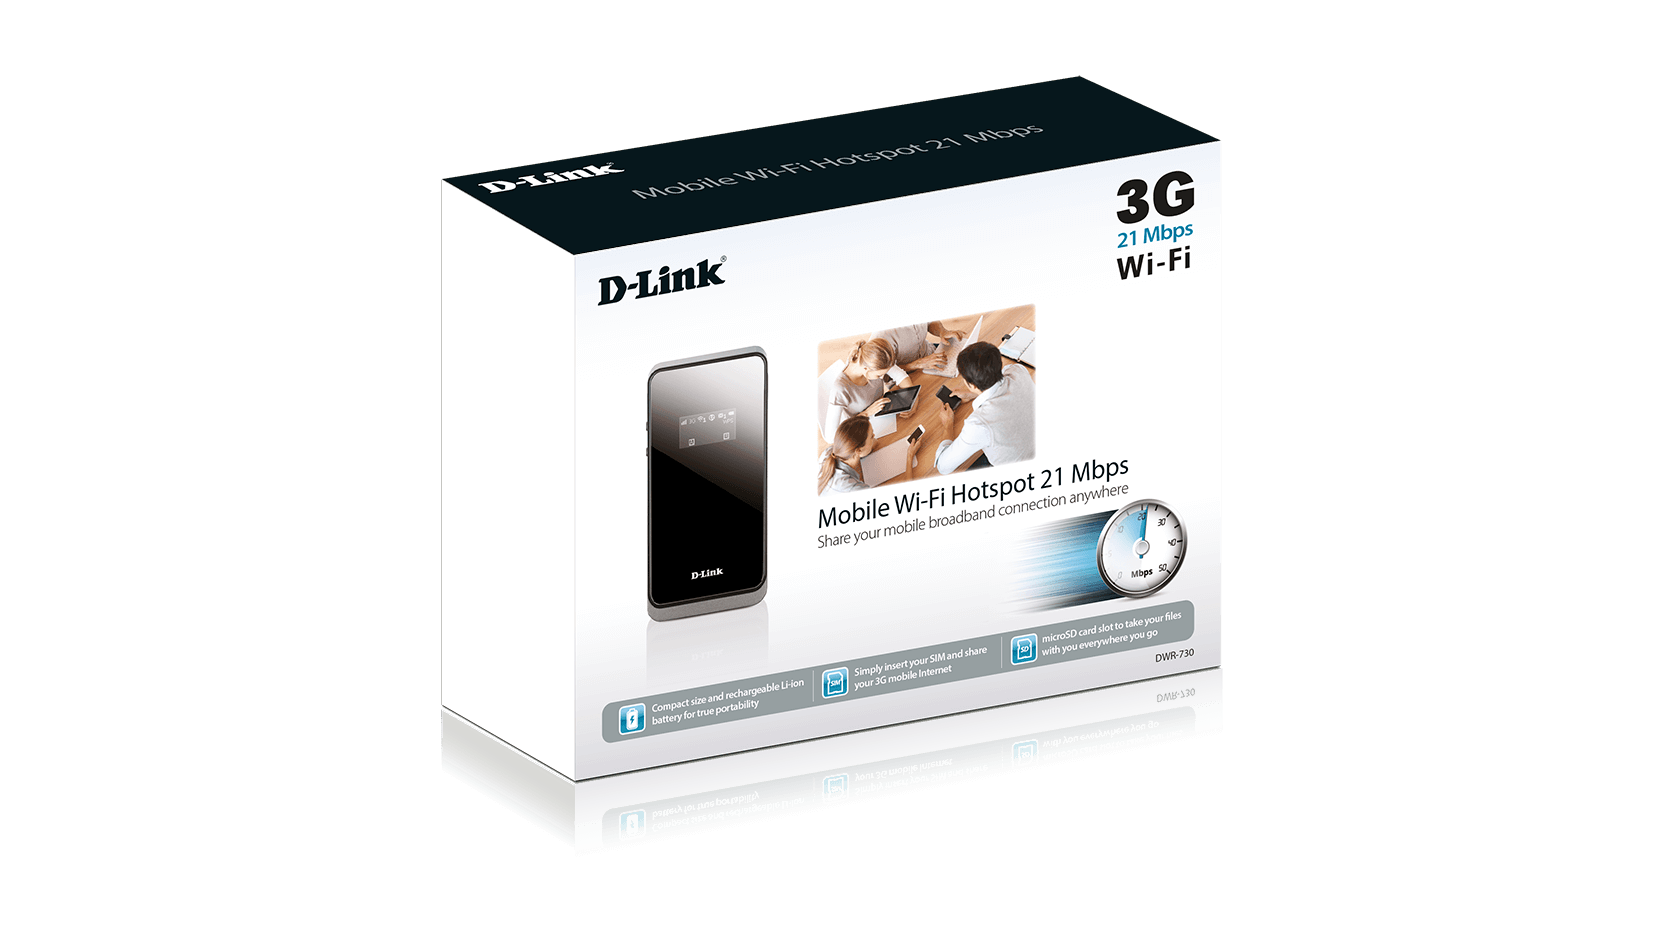 MODEM 3G D-LINK DWR-730 21,6Mbps POCKET HOTSPOT SIM INTERNET USB CHIAVETTA CARD 